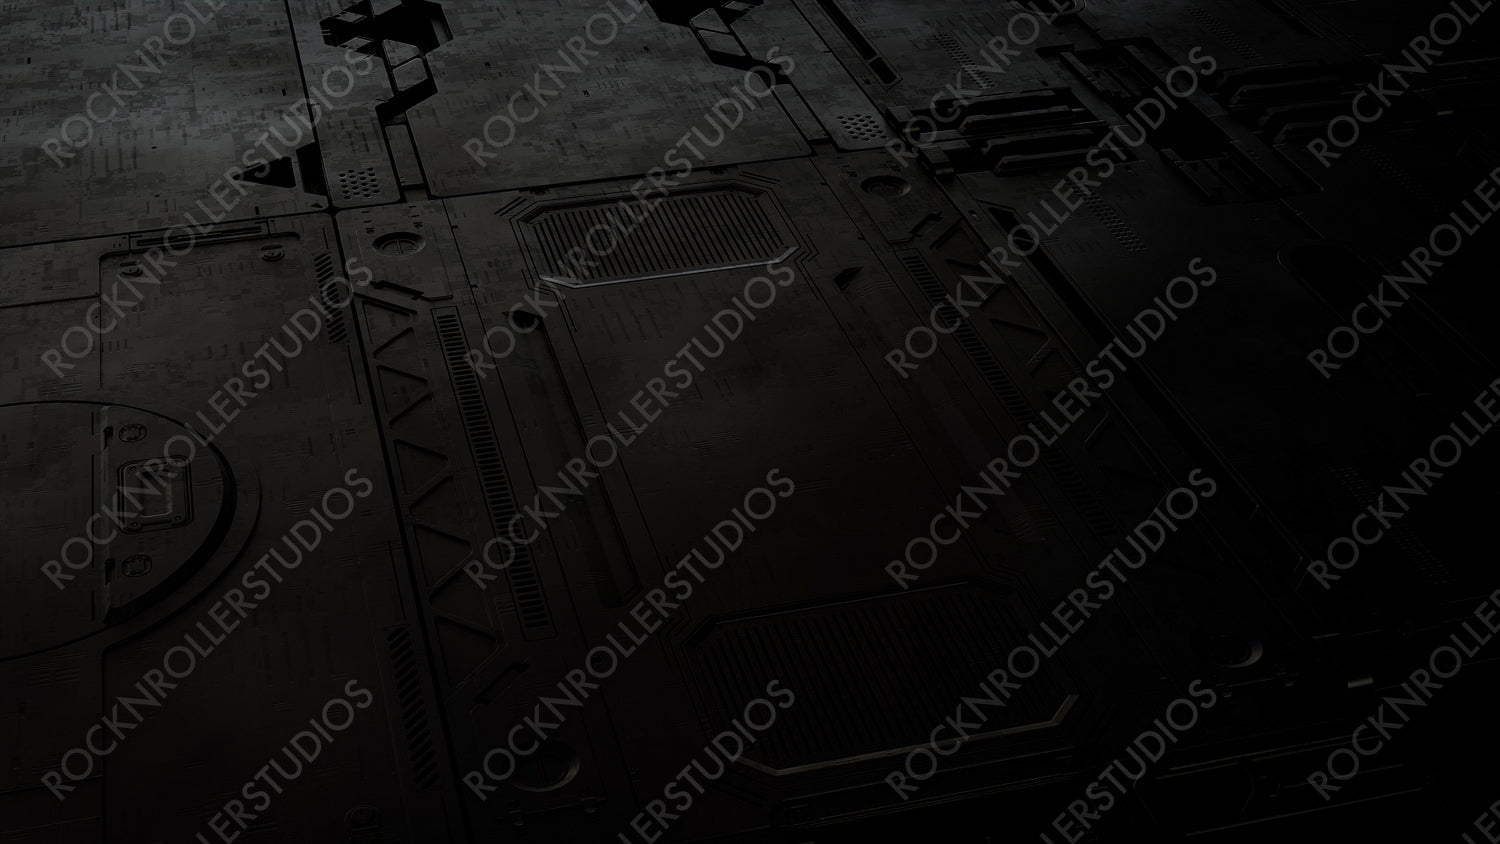 Black, Tech Wallpaper with Sci-Fi 3D Panels. Dark, Futuristic style. 3D Render.